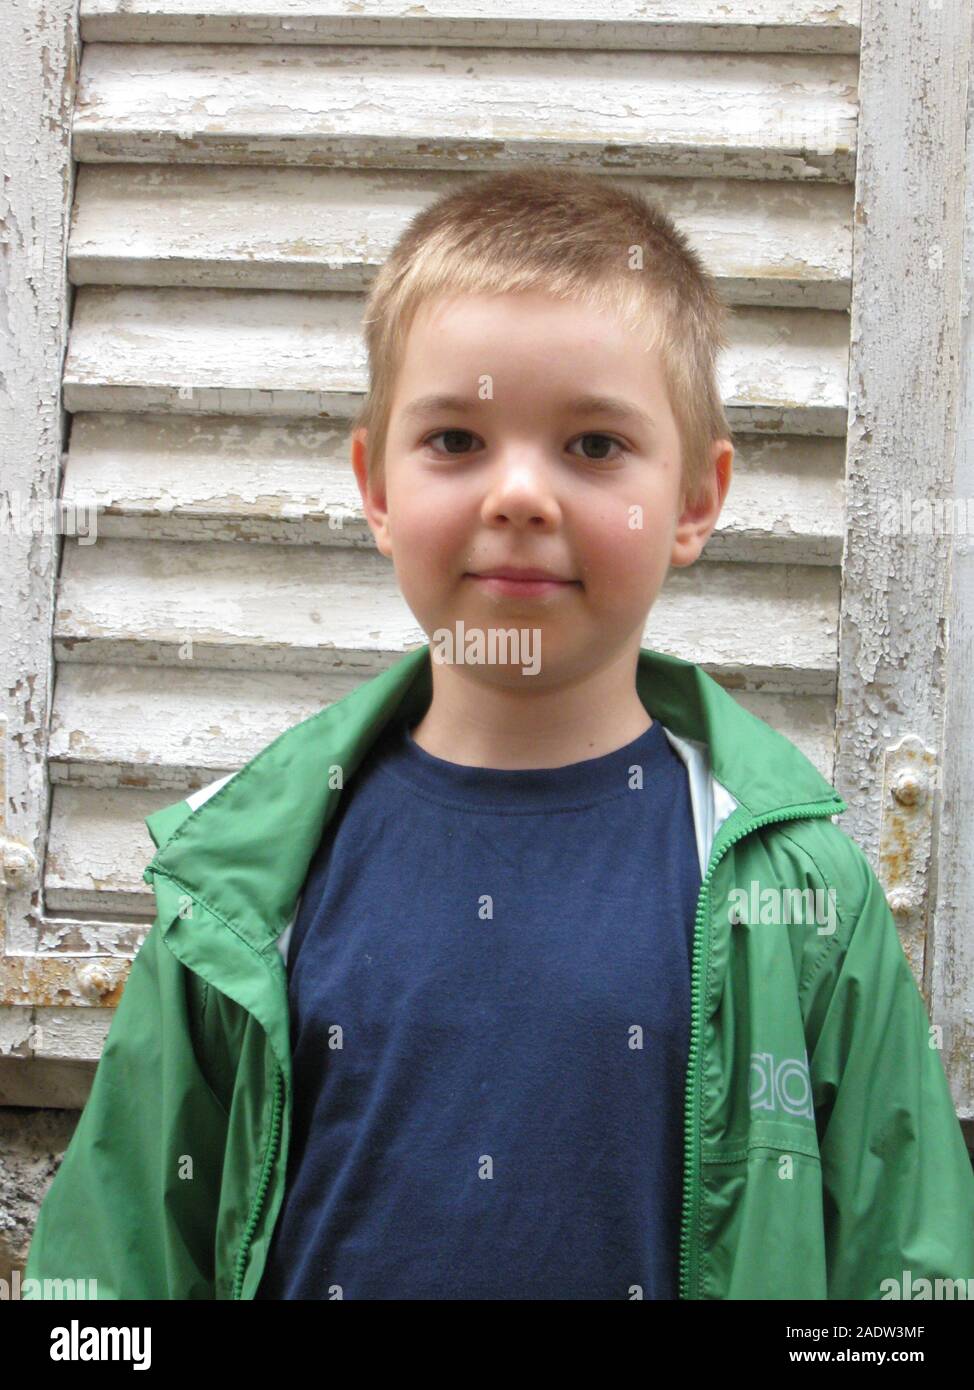 Boy portrait, stony background, funny face expression. Stock Photo